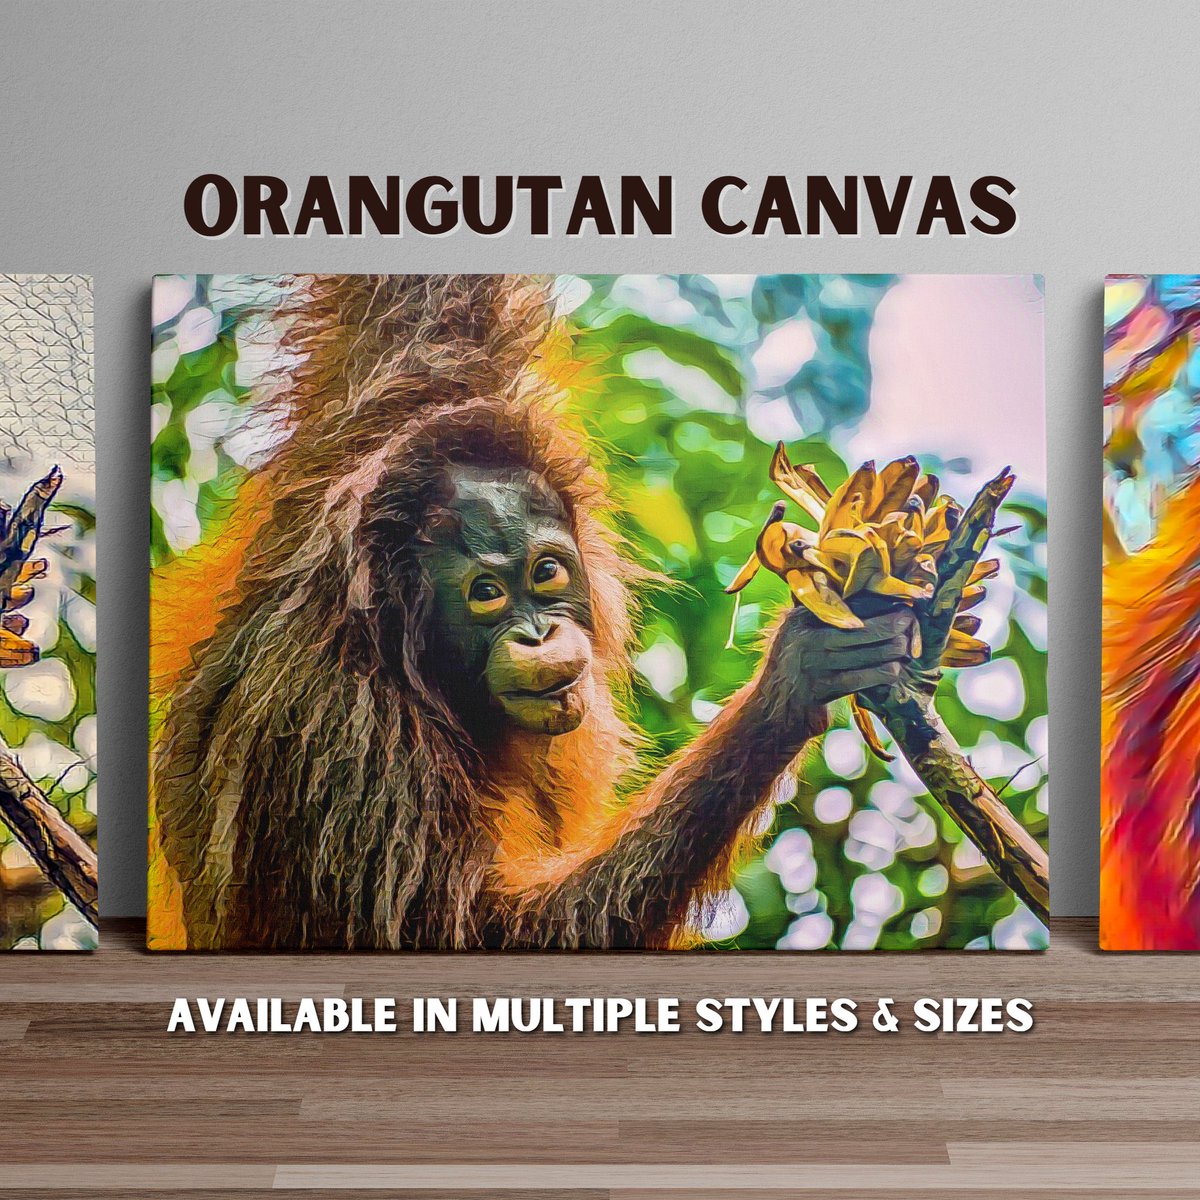 Orangutan Canvas Wall Art Print

etsy.com/listing/135783…

#orangutan #borneo #malaysia #canvaswallart #travelprint #travelgift #traveldecor